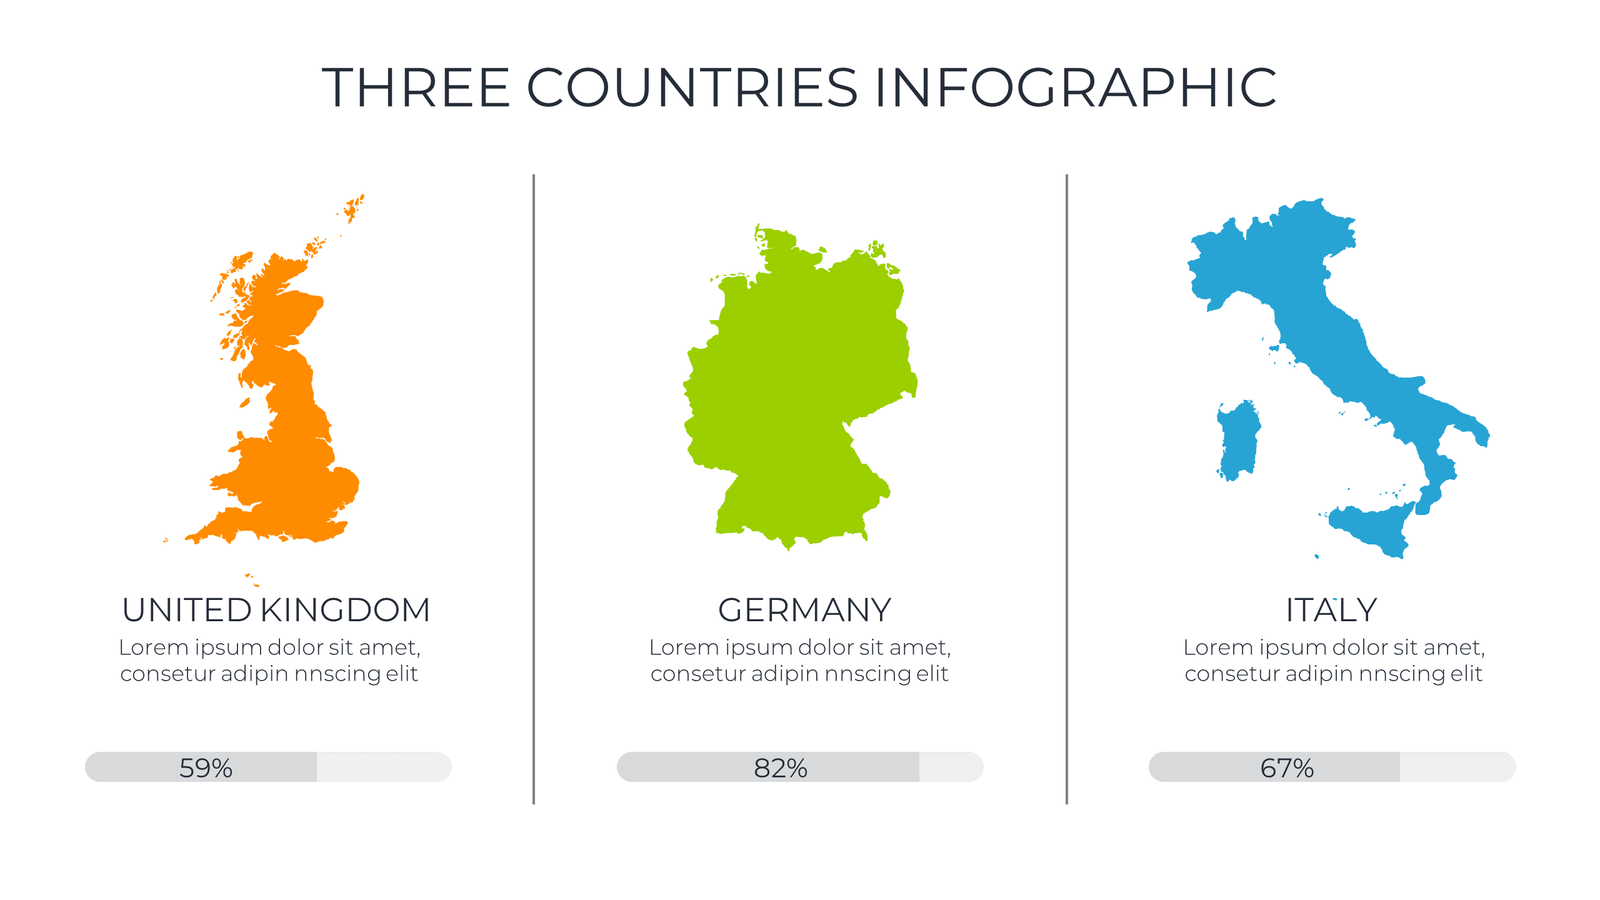 UK, Germany & Italy Comparison